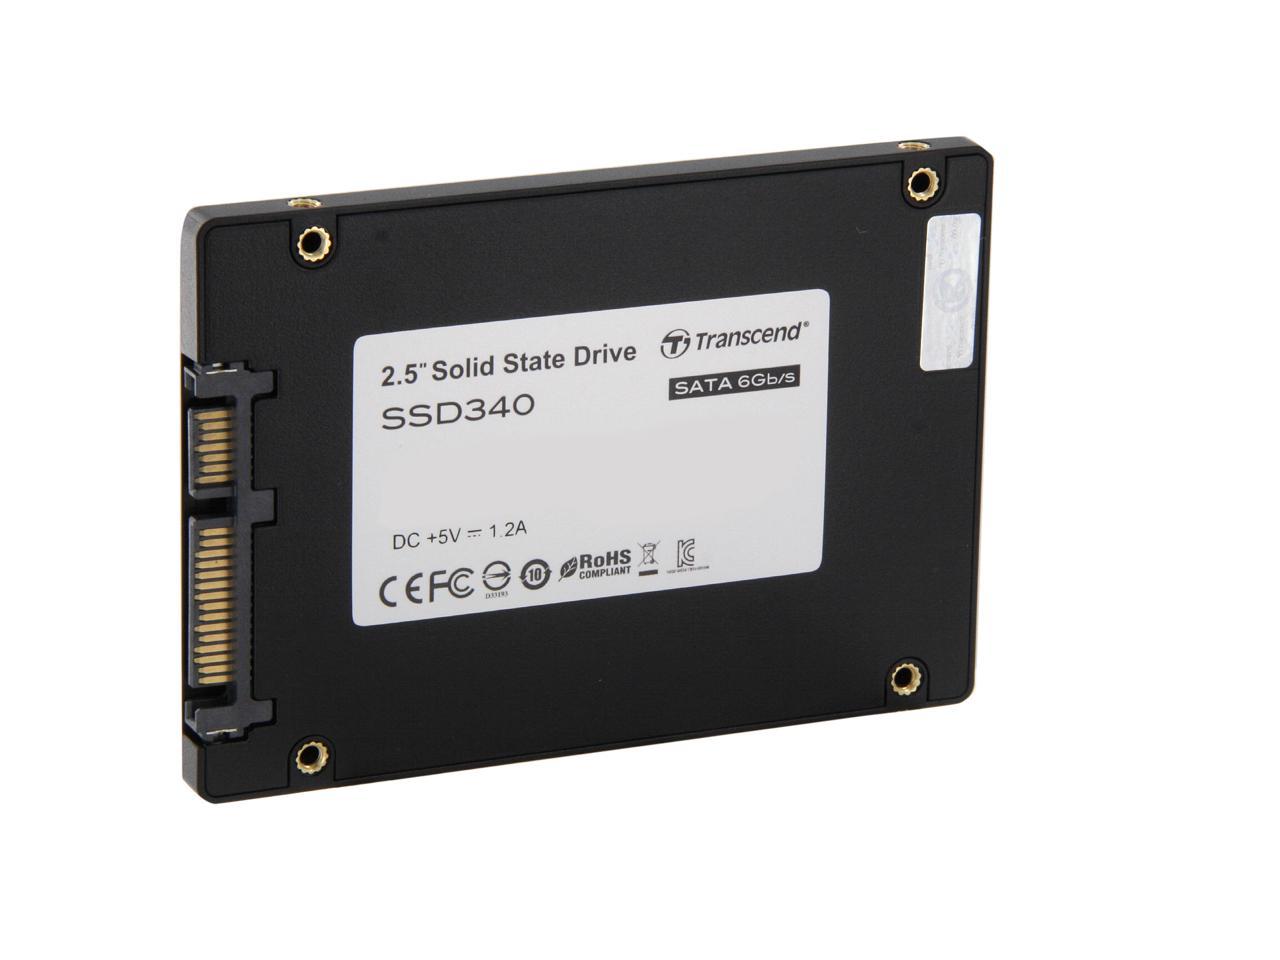 Transcend SSD340 2.5